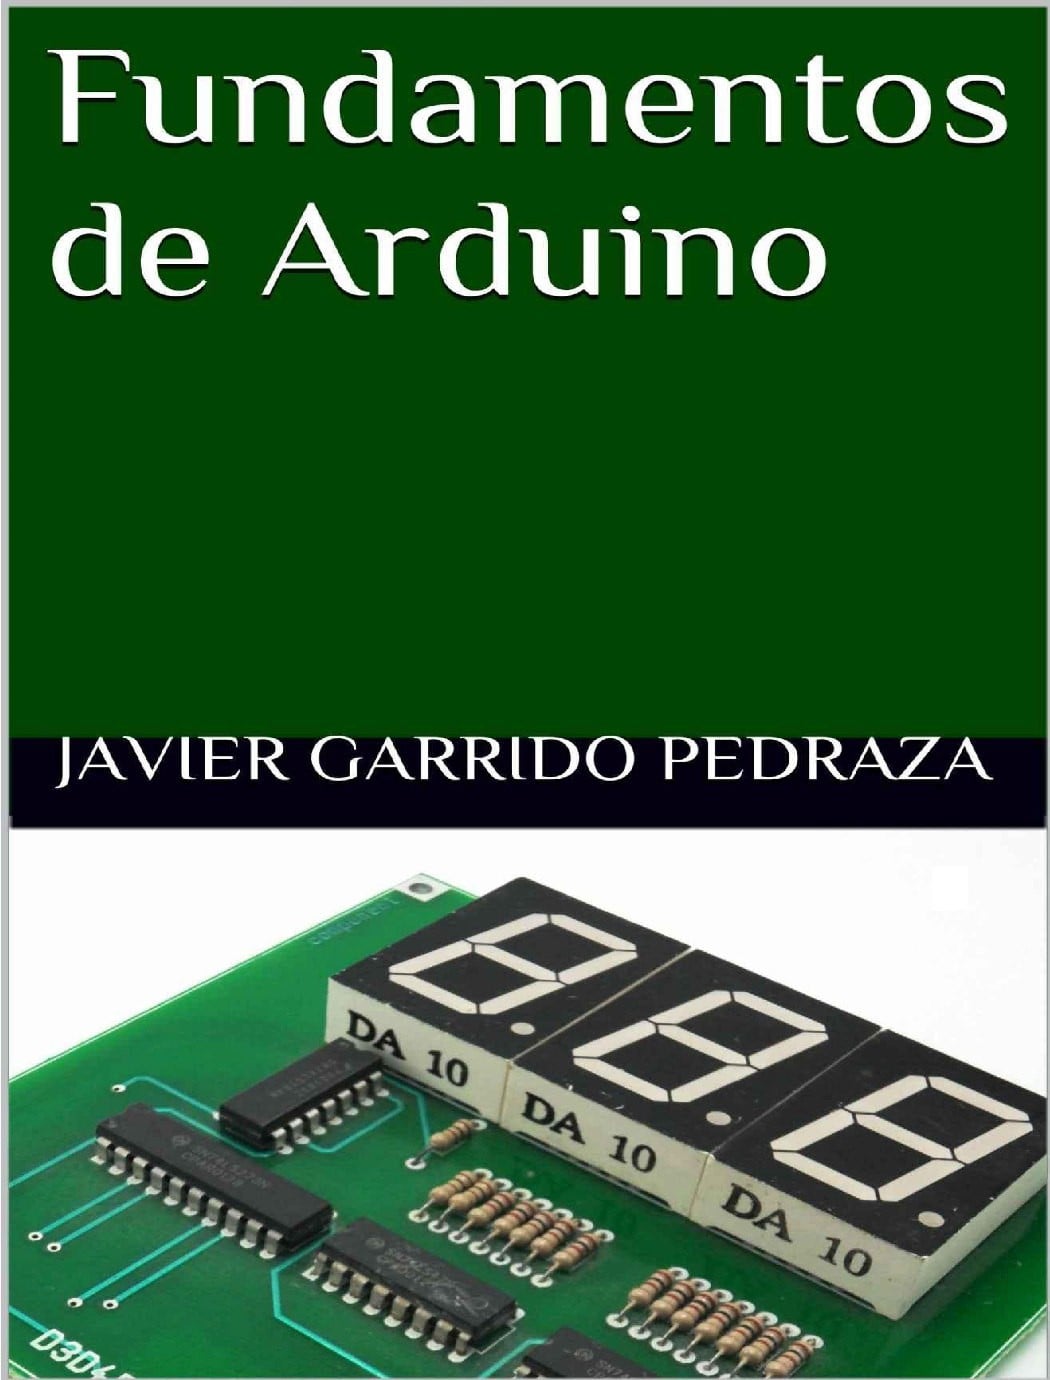 Fundamentos de Arduino 1 Edición Javier Garrido Pedraza PDF